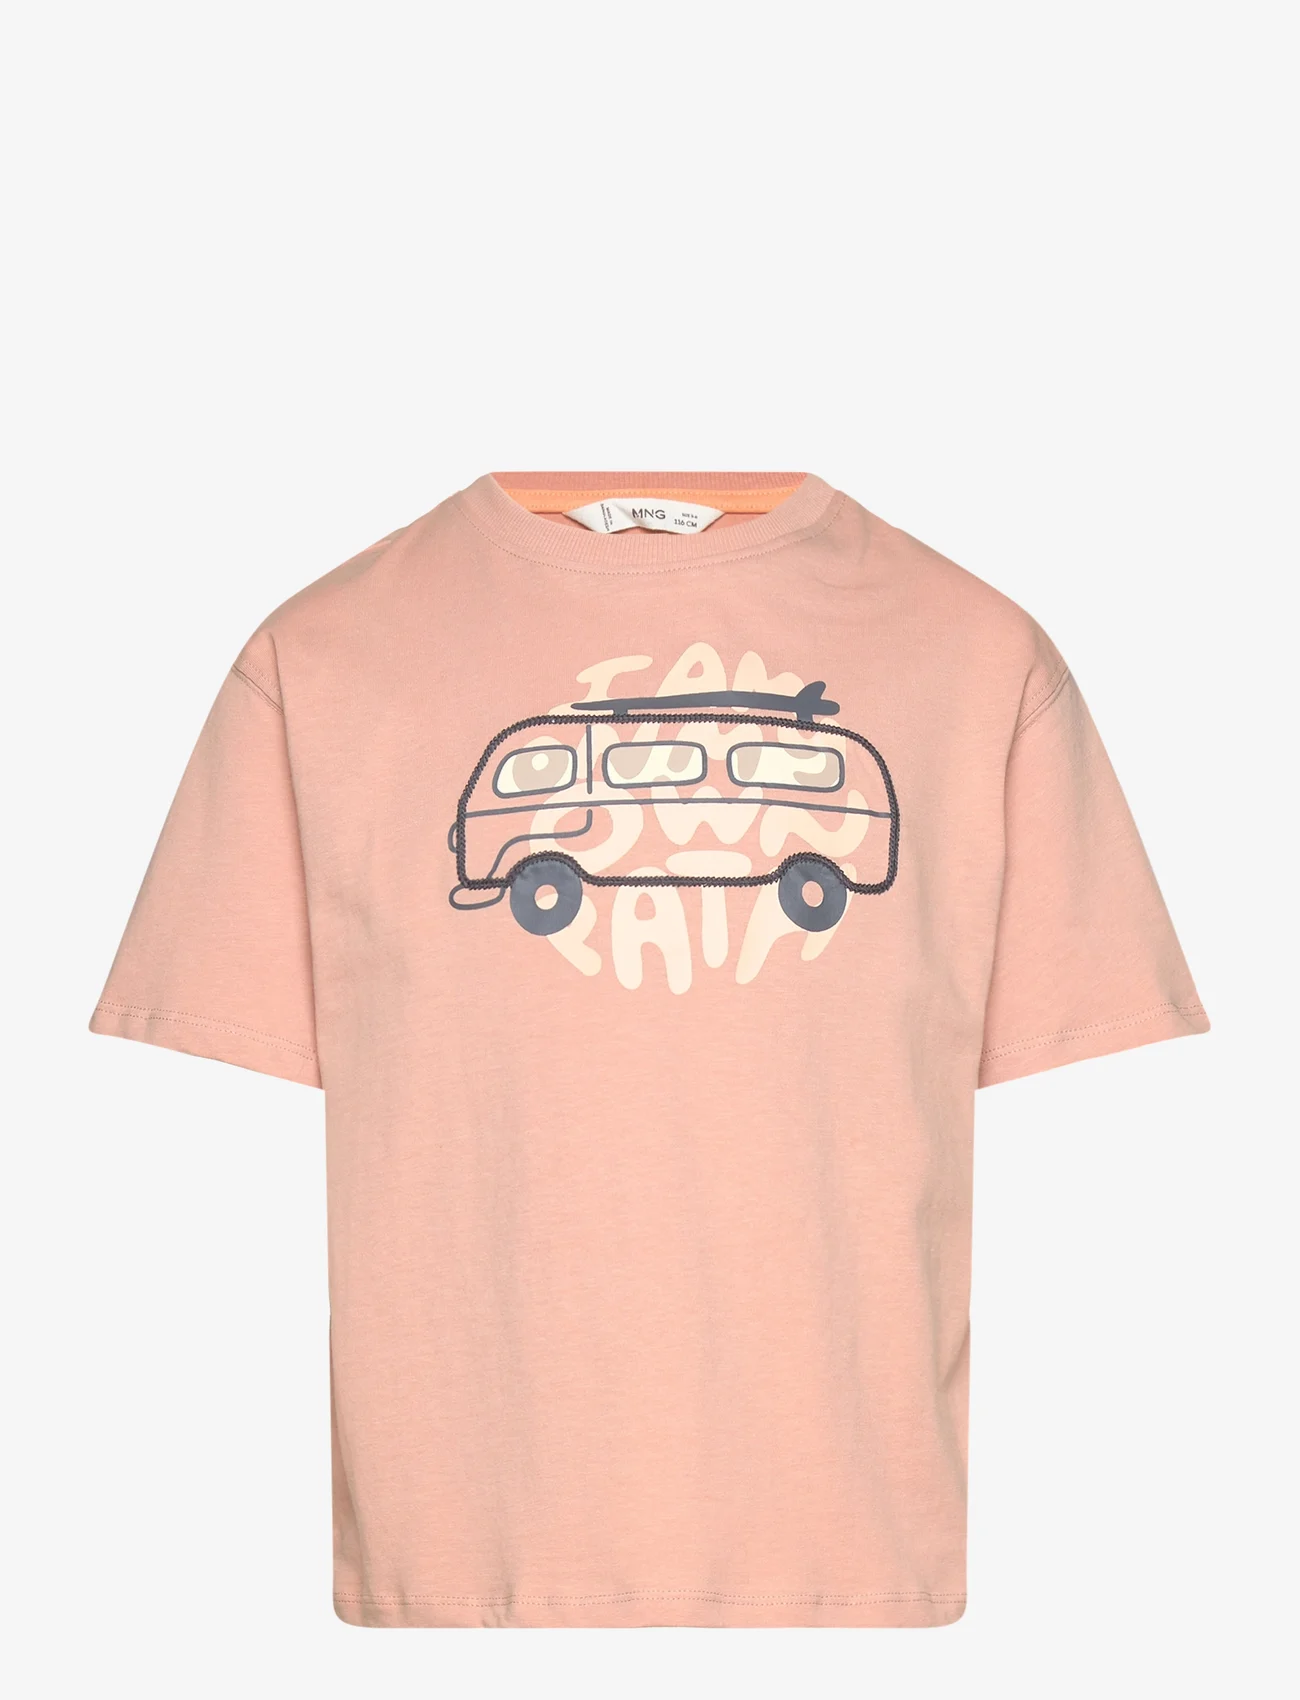 Mango - Embossed printed t-shirt - kurzärmelige - lt-pastel orange - 0